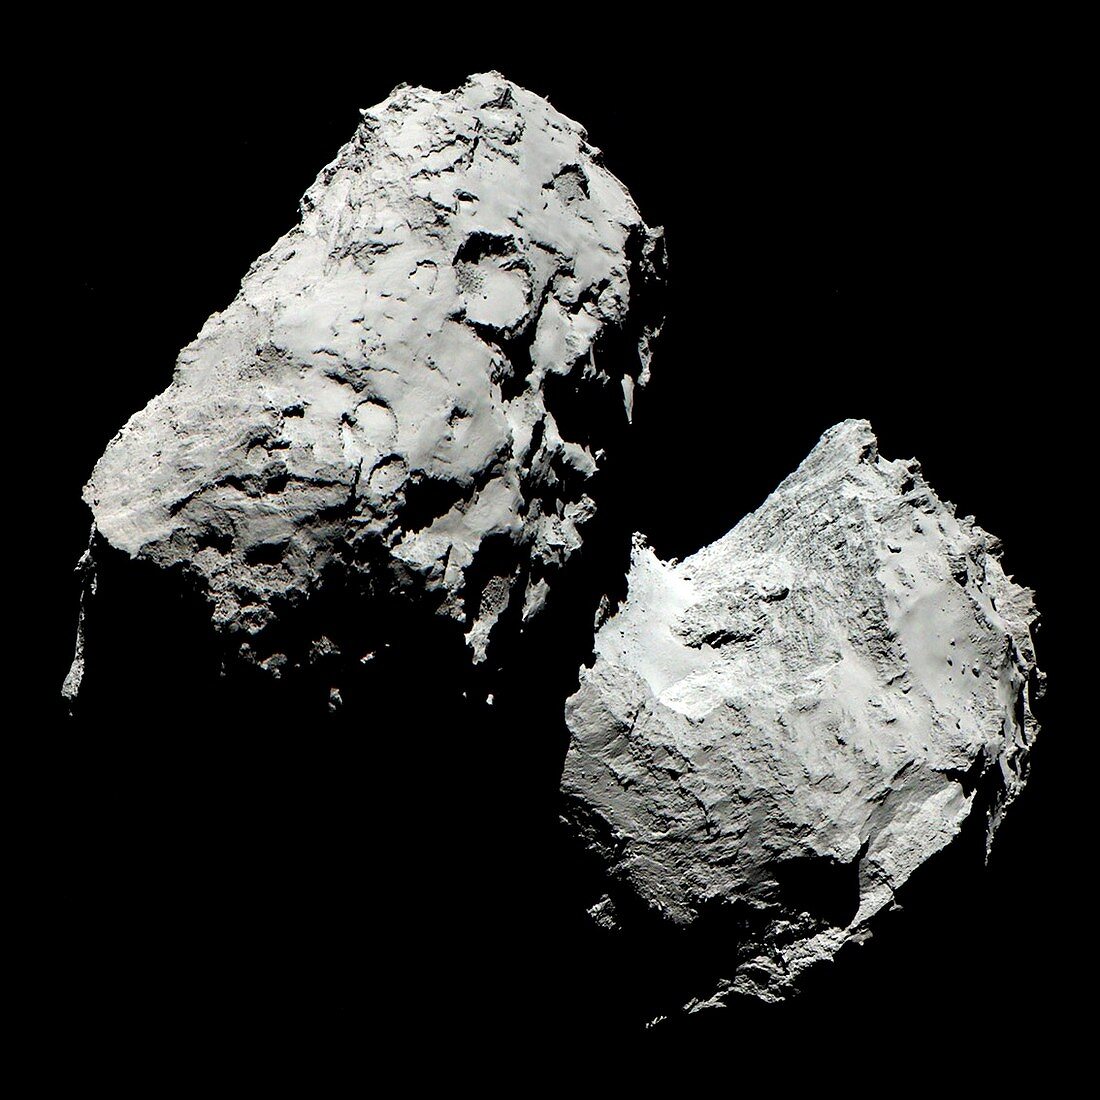 Comet Churyumov-Gerasimenko from Rosetta